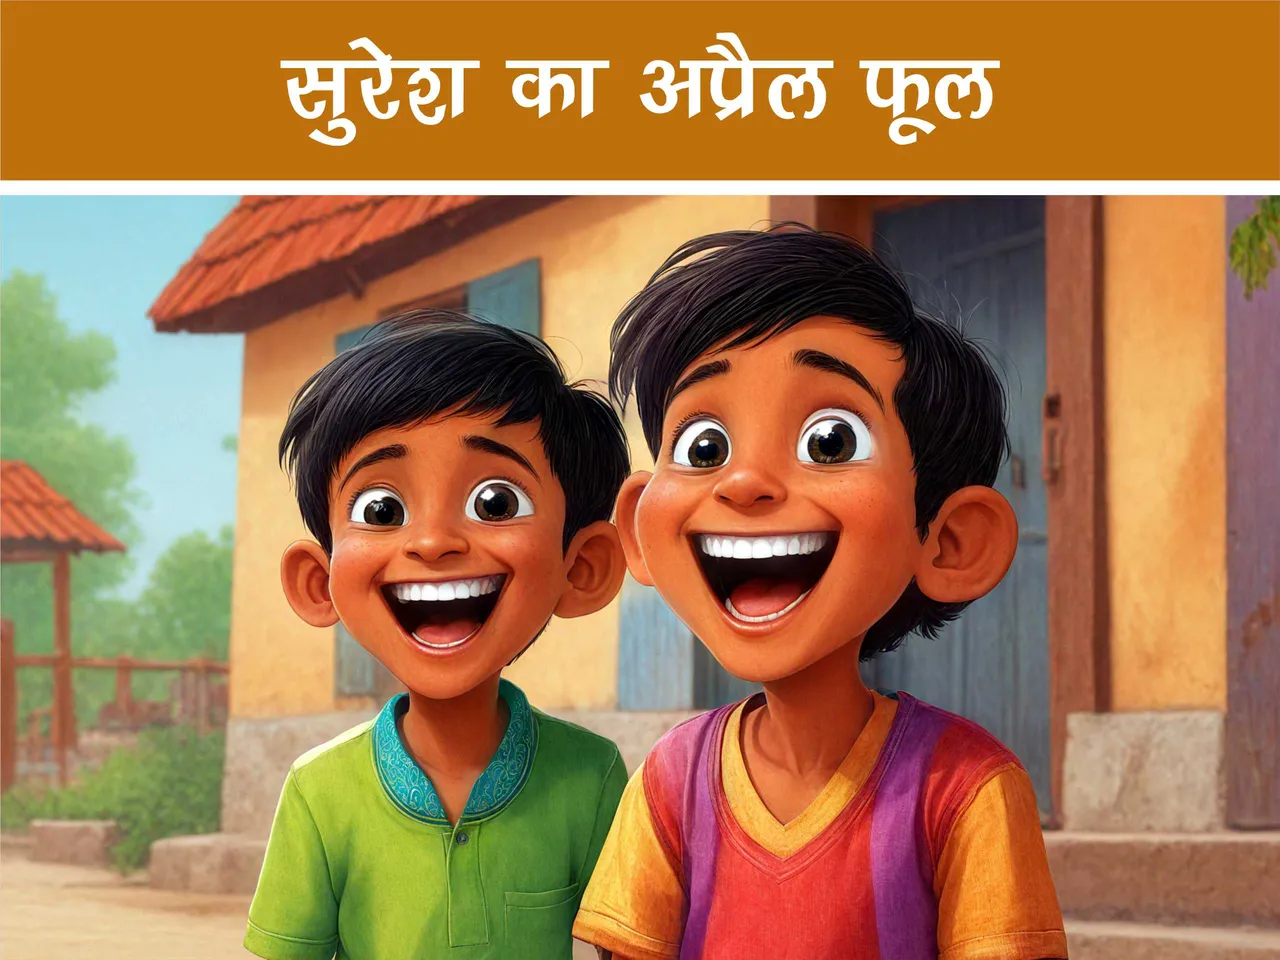 Cartoon image of two kids laughing